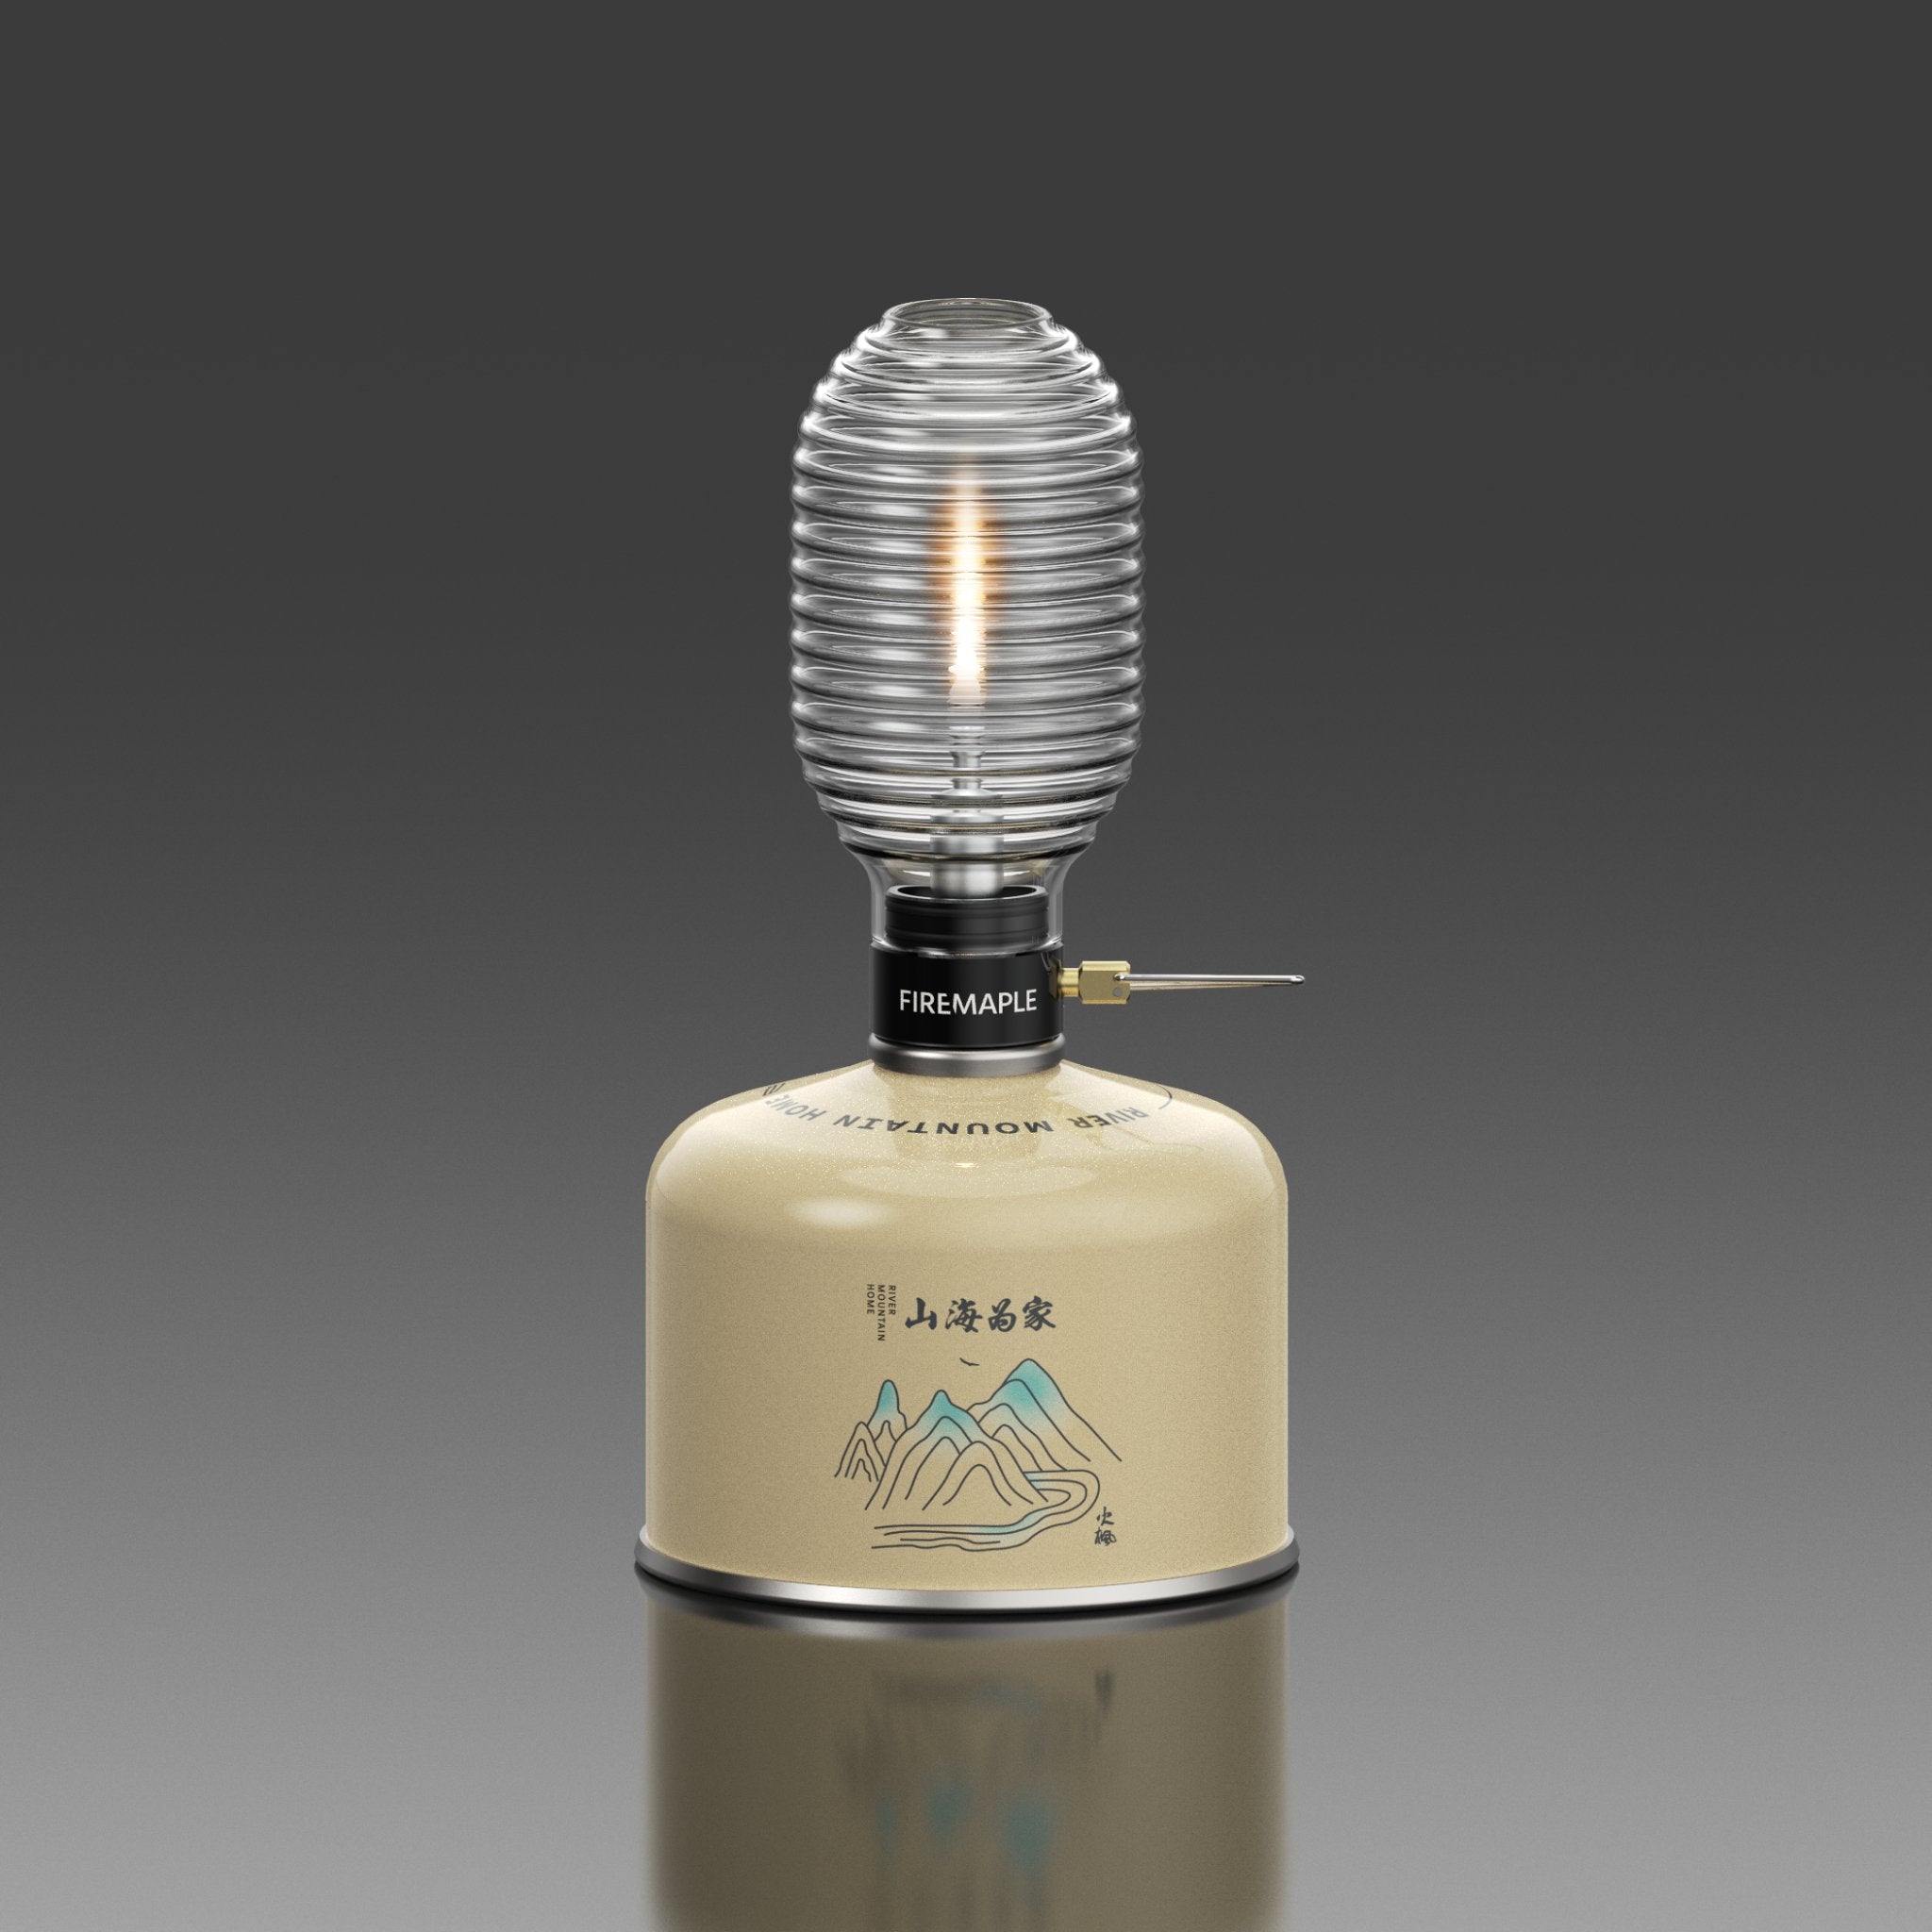 Firefly Gas Lantern, Adjustable Luminance Camping Lamp